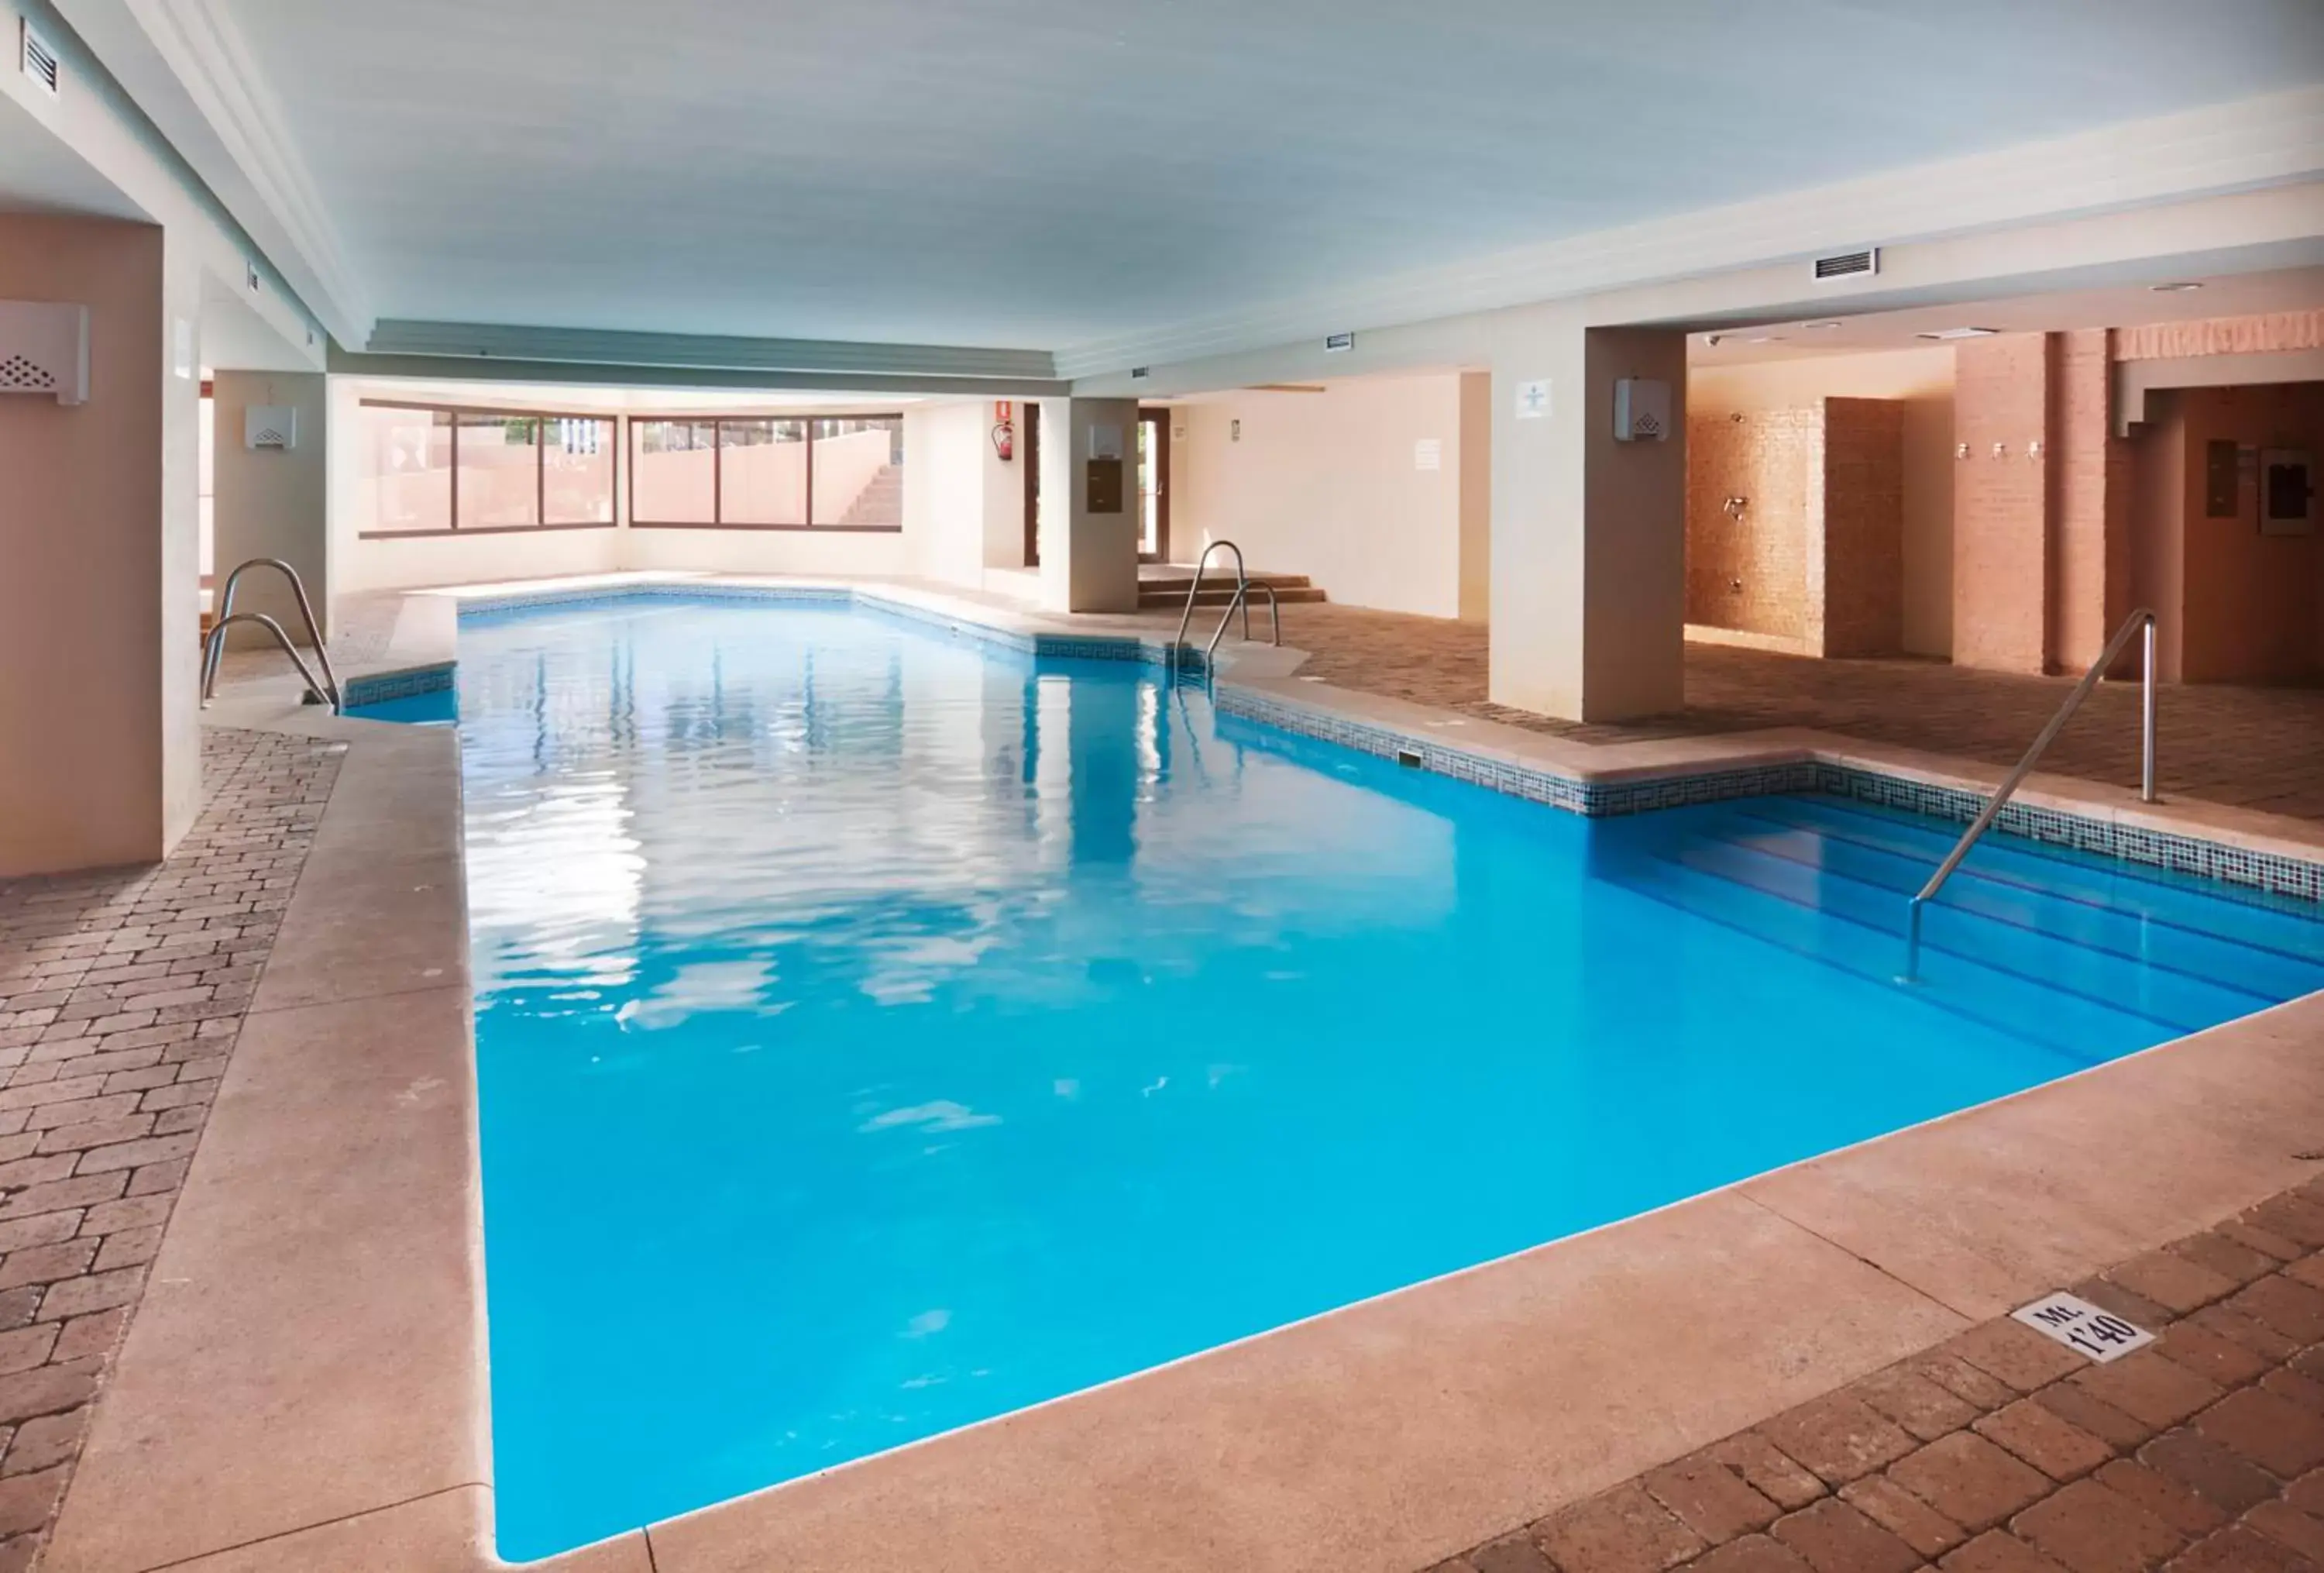 Swimming Pool in Playacanela Hotel